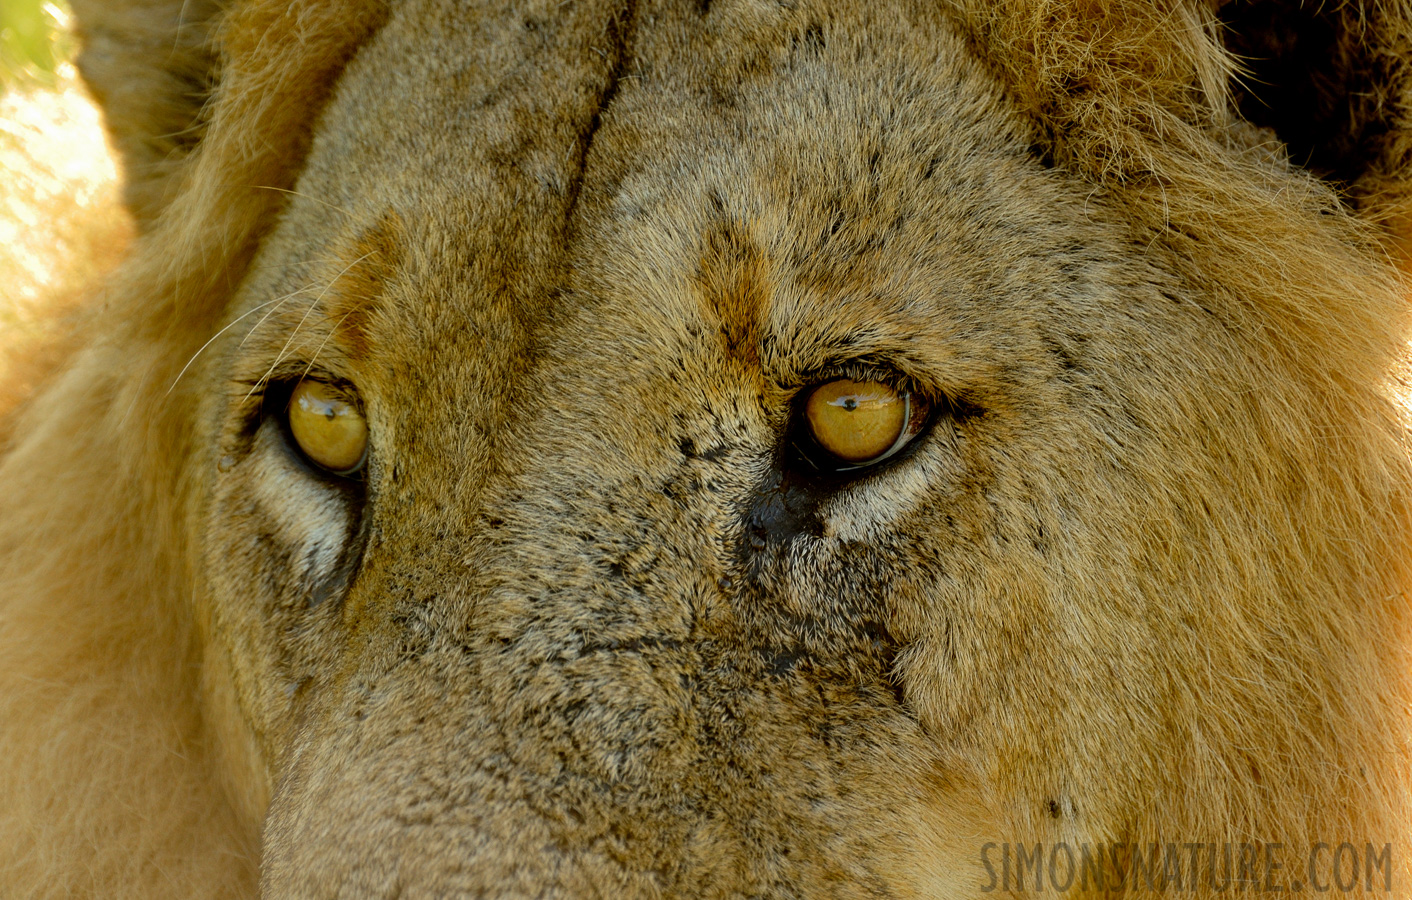 Panthera leo melanochaita [550 mm, 1/200 sec at f / 8.0, ISO 1000]